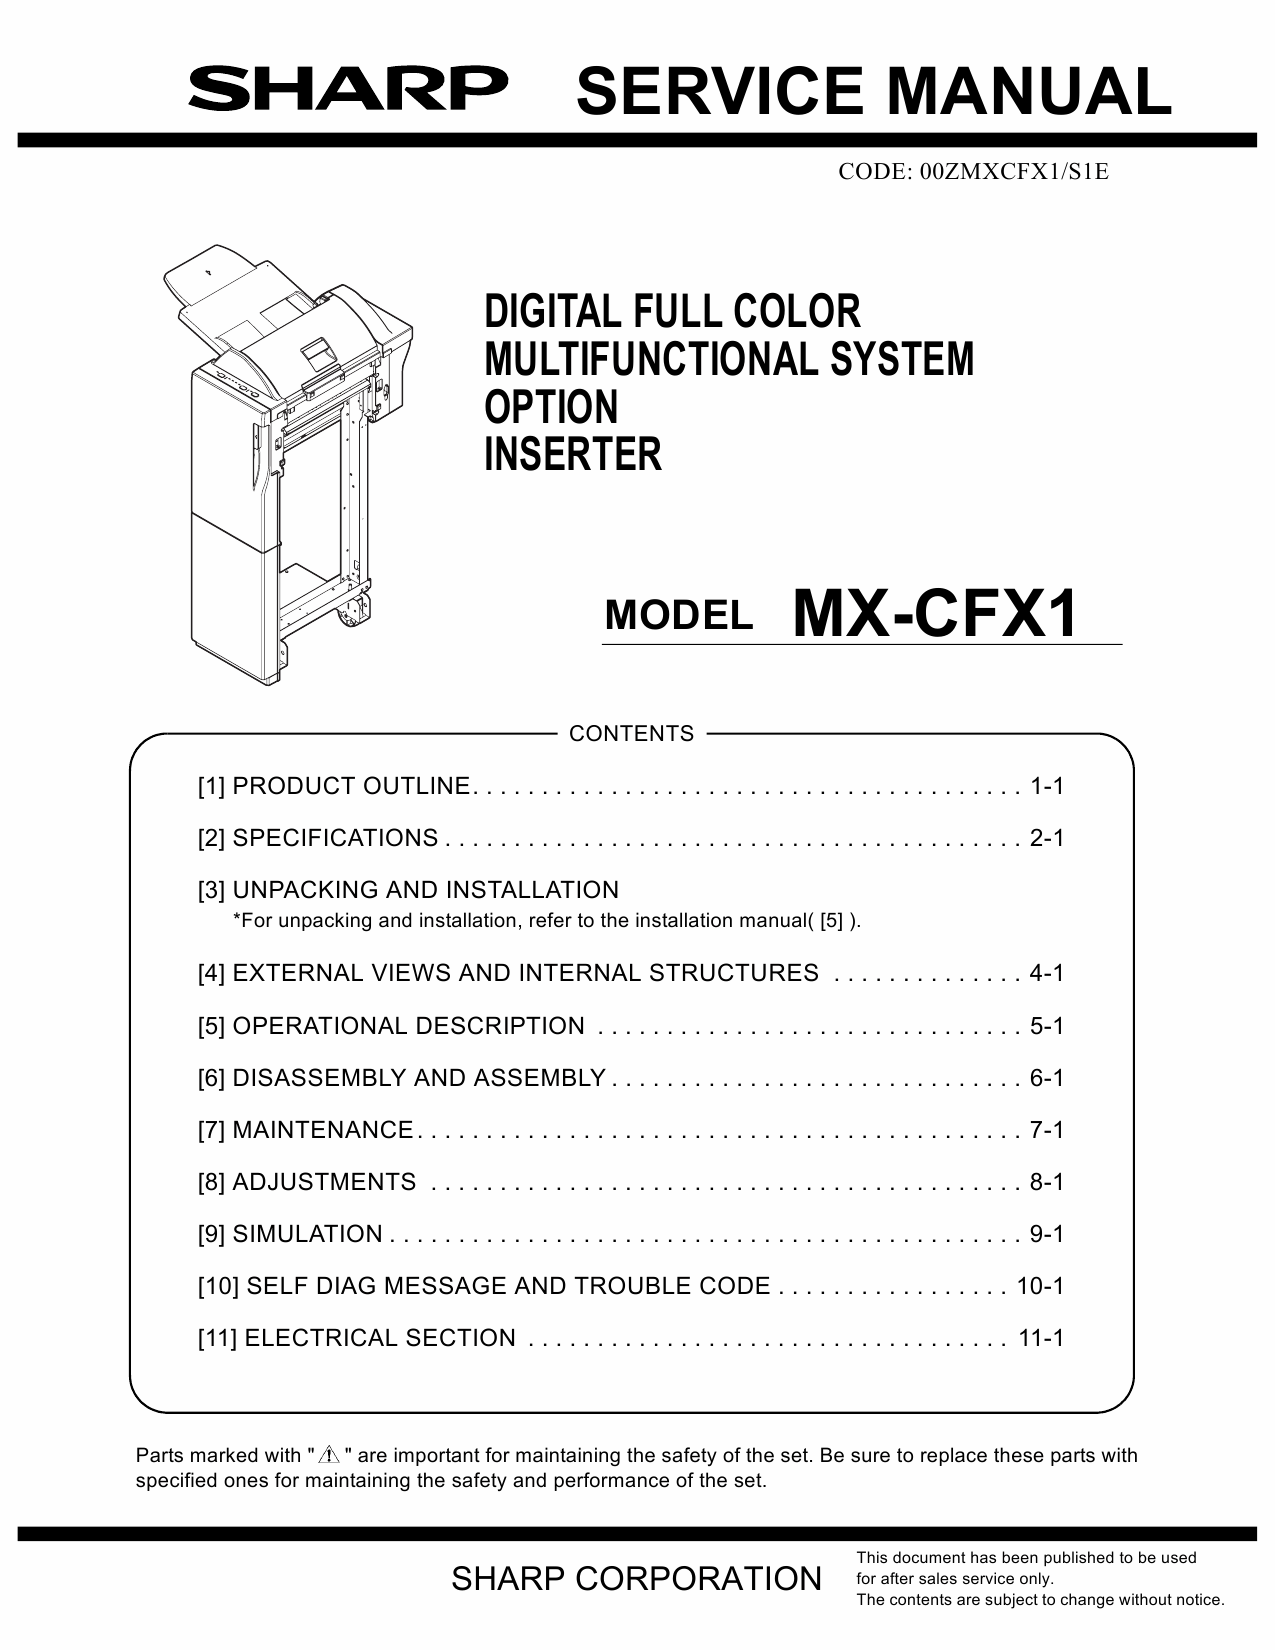 SHARP MX CFX1 Service Manual-1